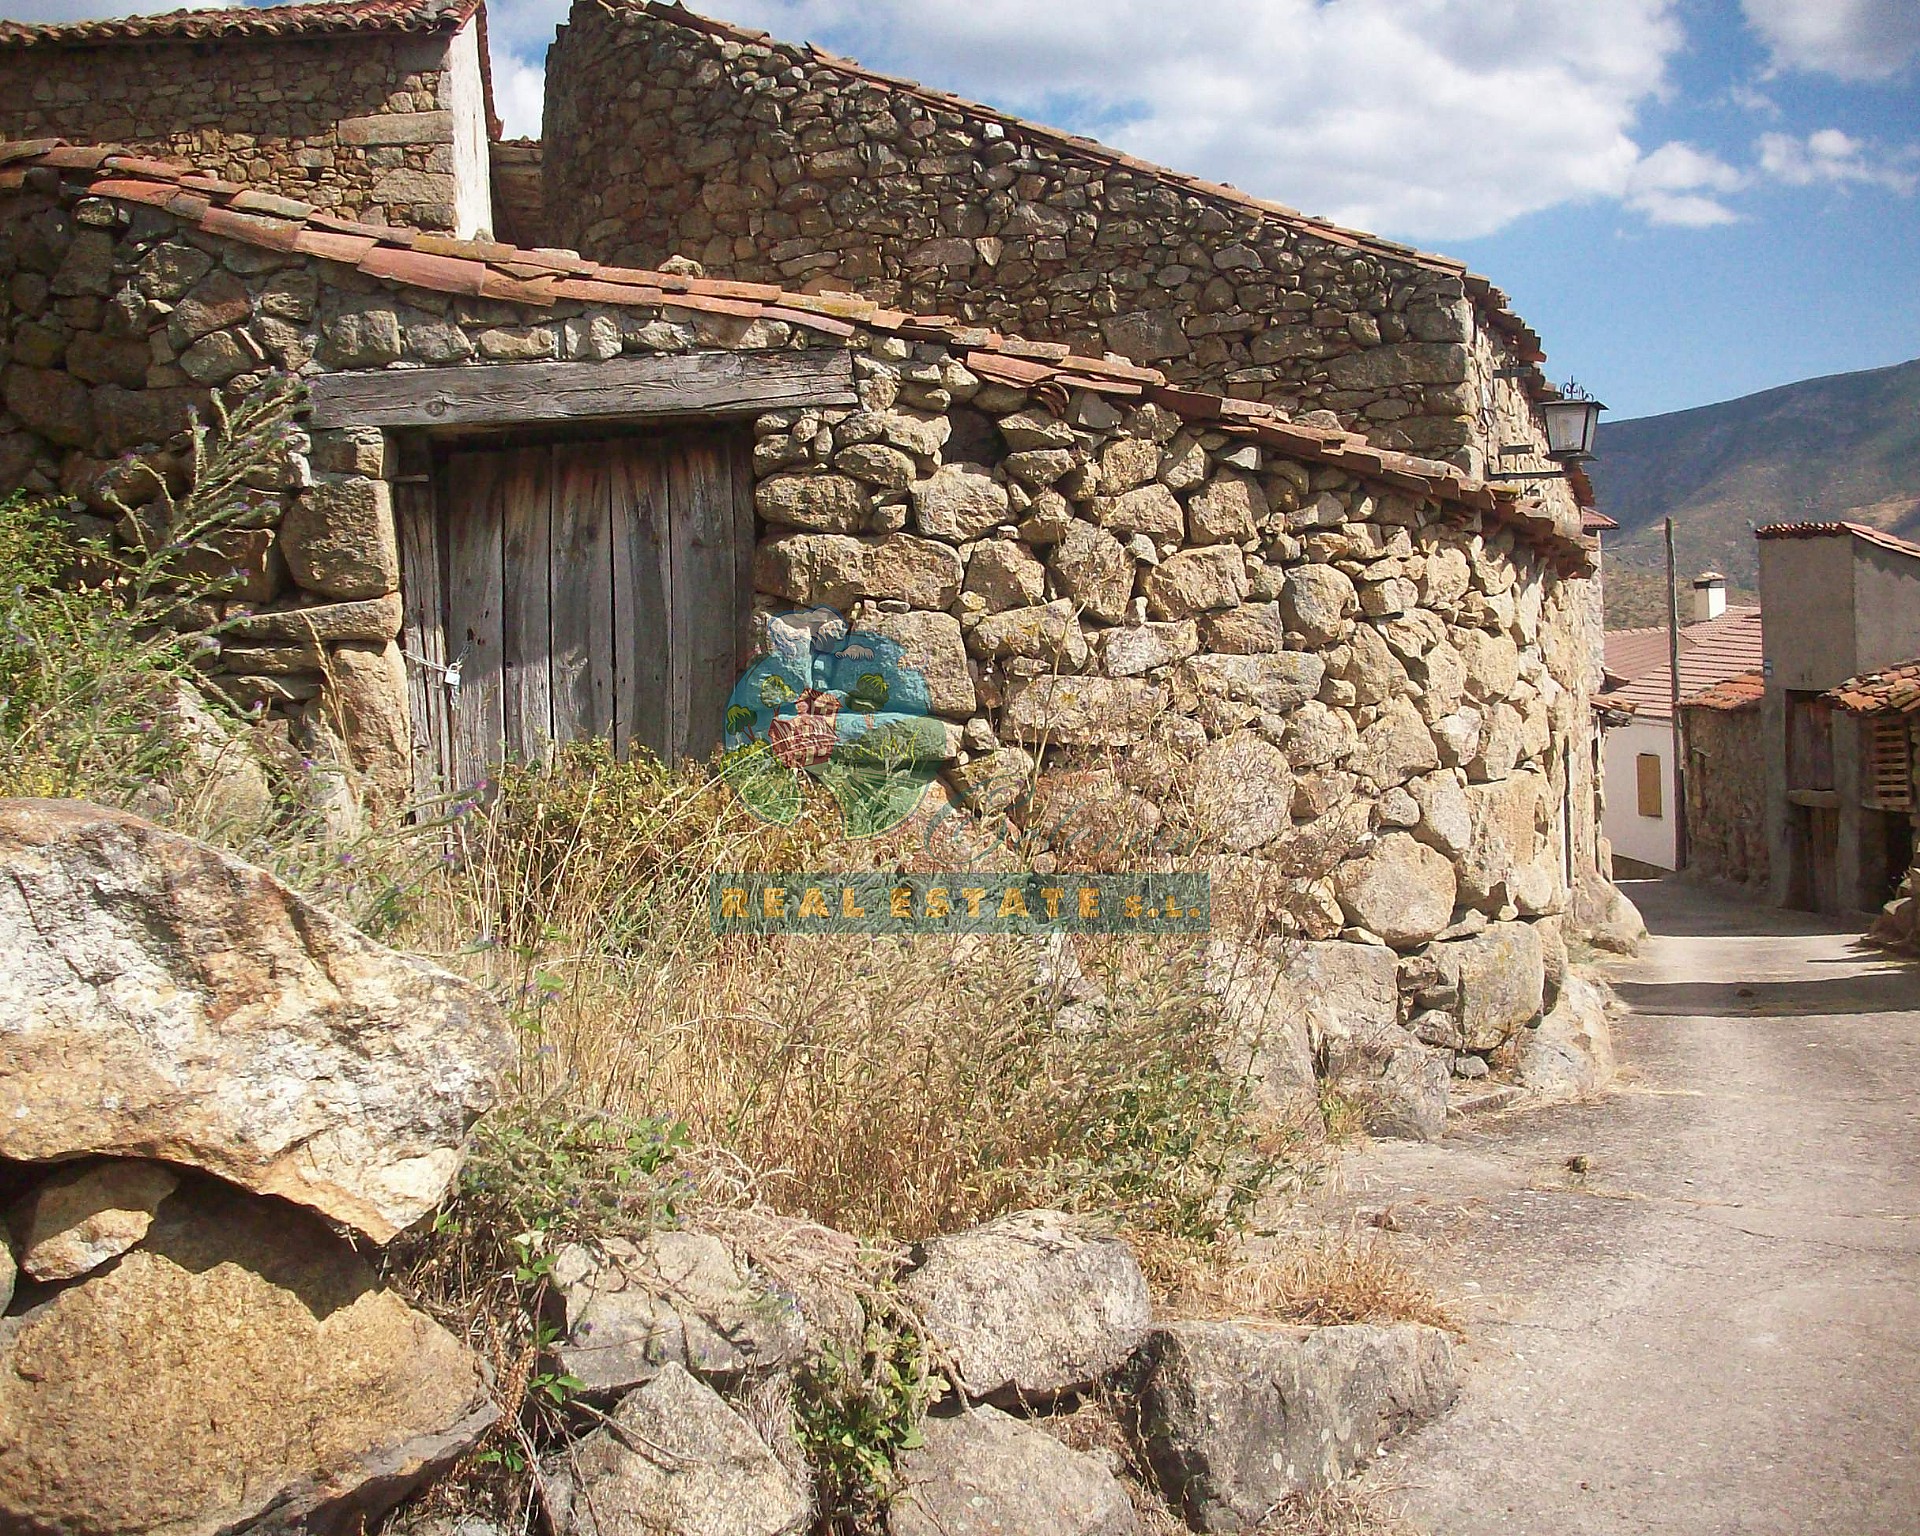 Barn for restoring into house in Sierra de Gredos.